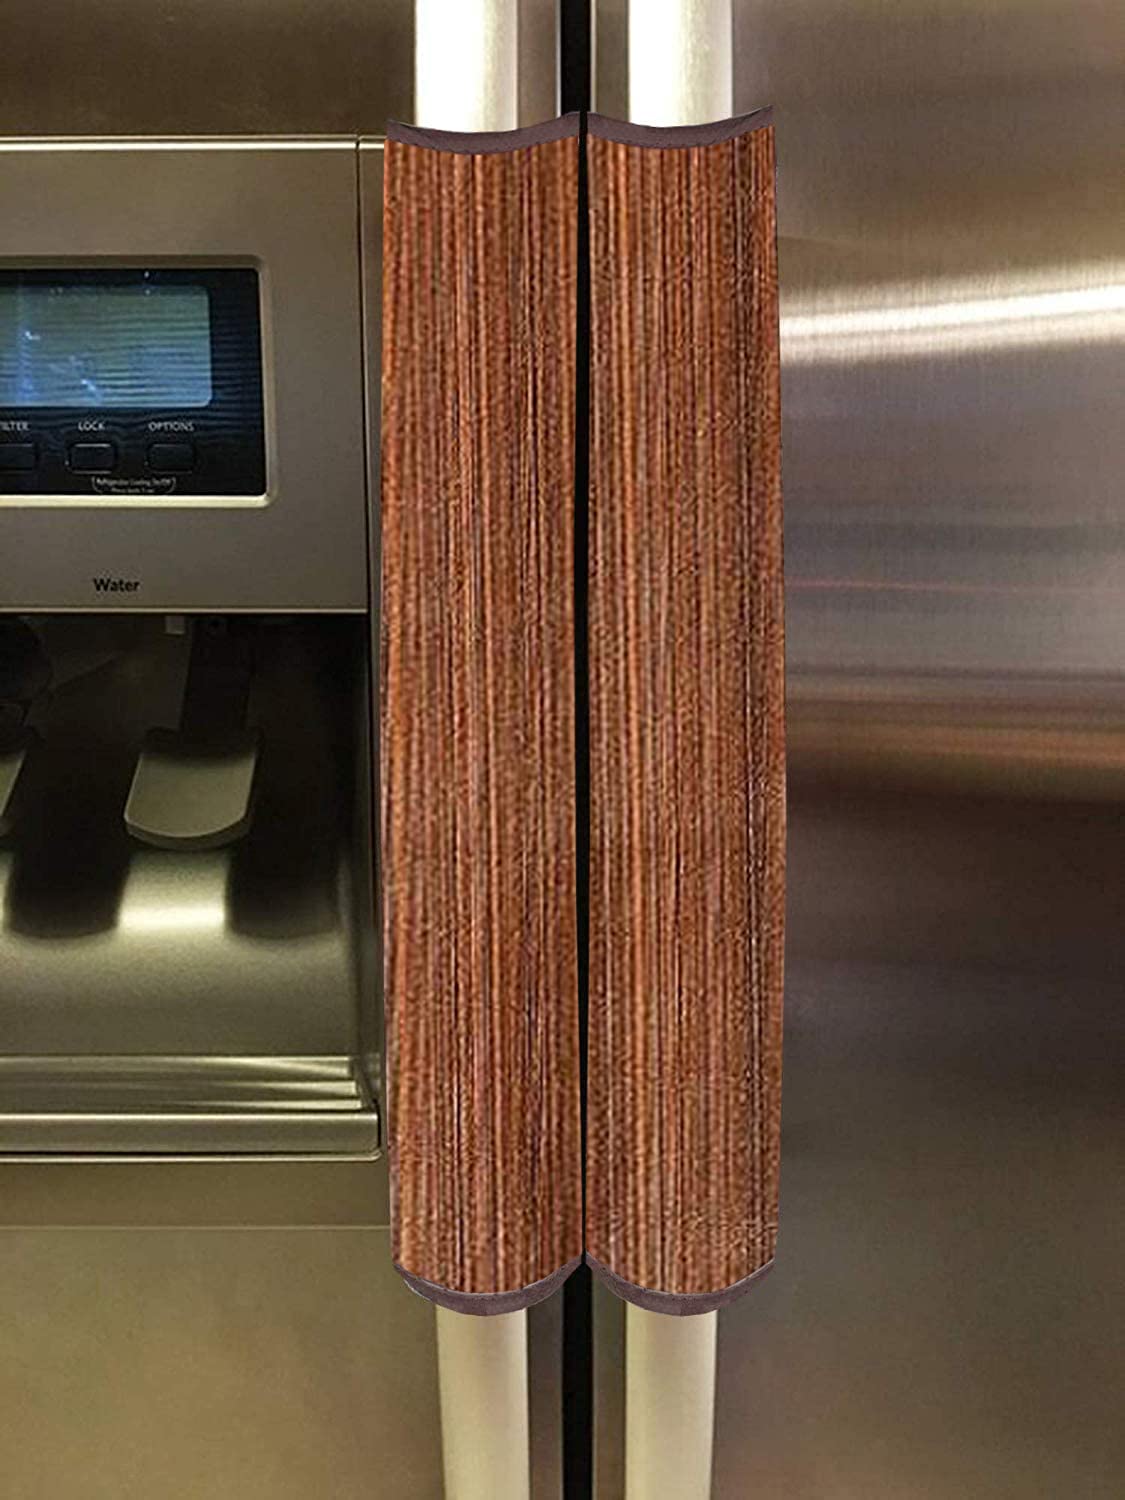 Kuber Industries Lining Refrigerator Door Handle Covers (Brown, Model: HS_37_KUBMART020148) - Set of 2